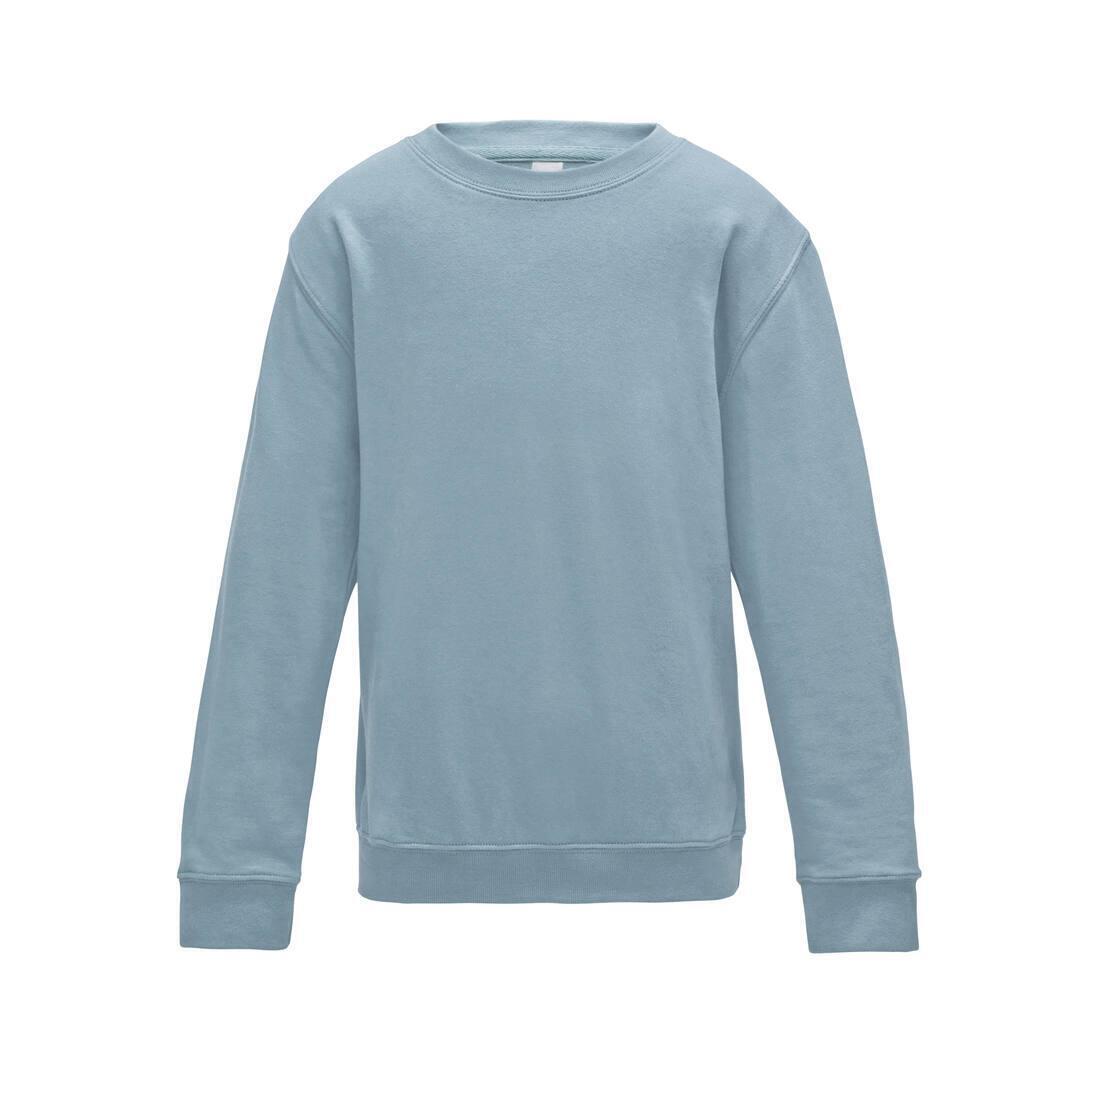 Kinder sweatshirts hemelsblauw personaliseer je sweatshirts